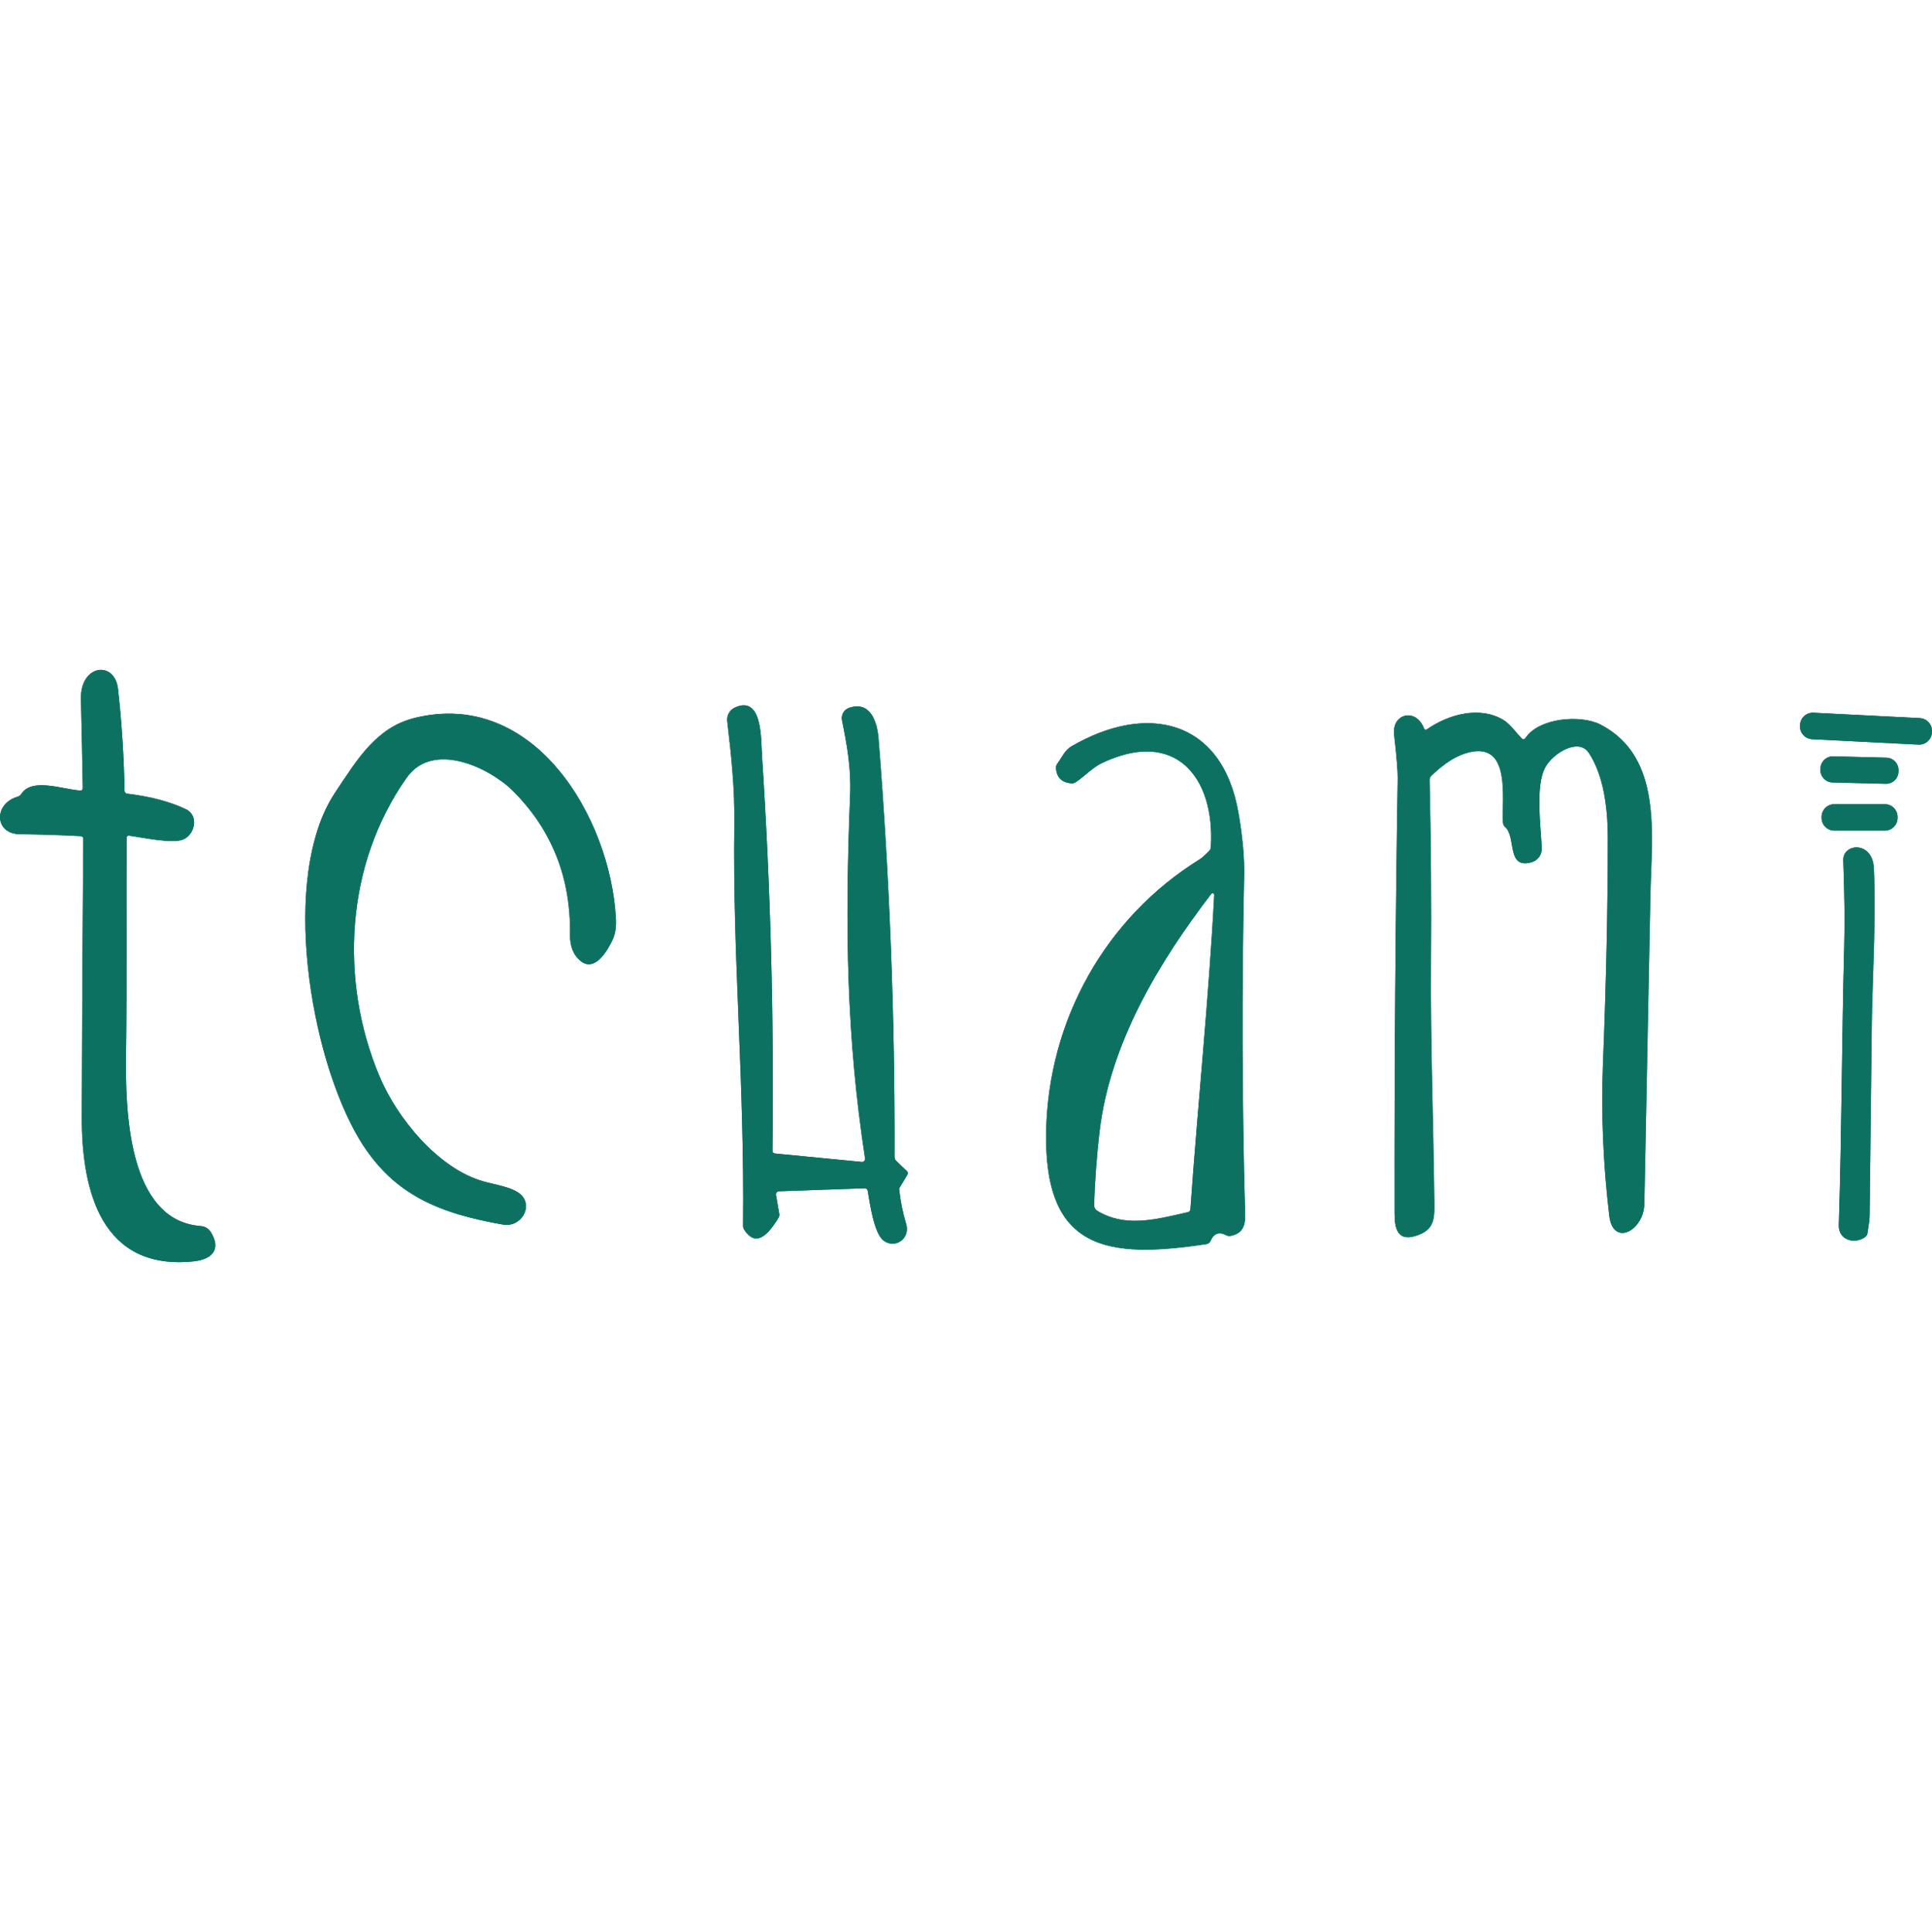 Tchami Logo  Transparent Clipart